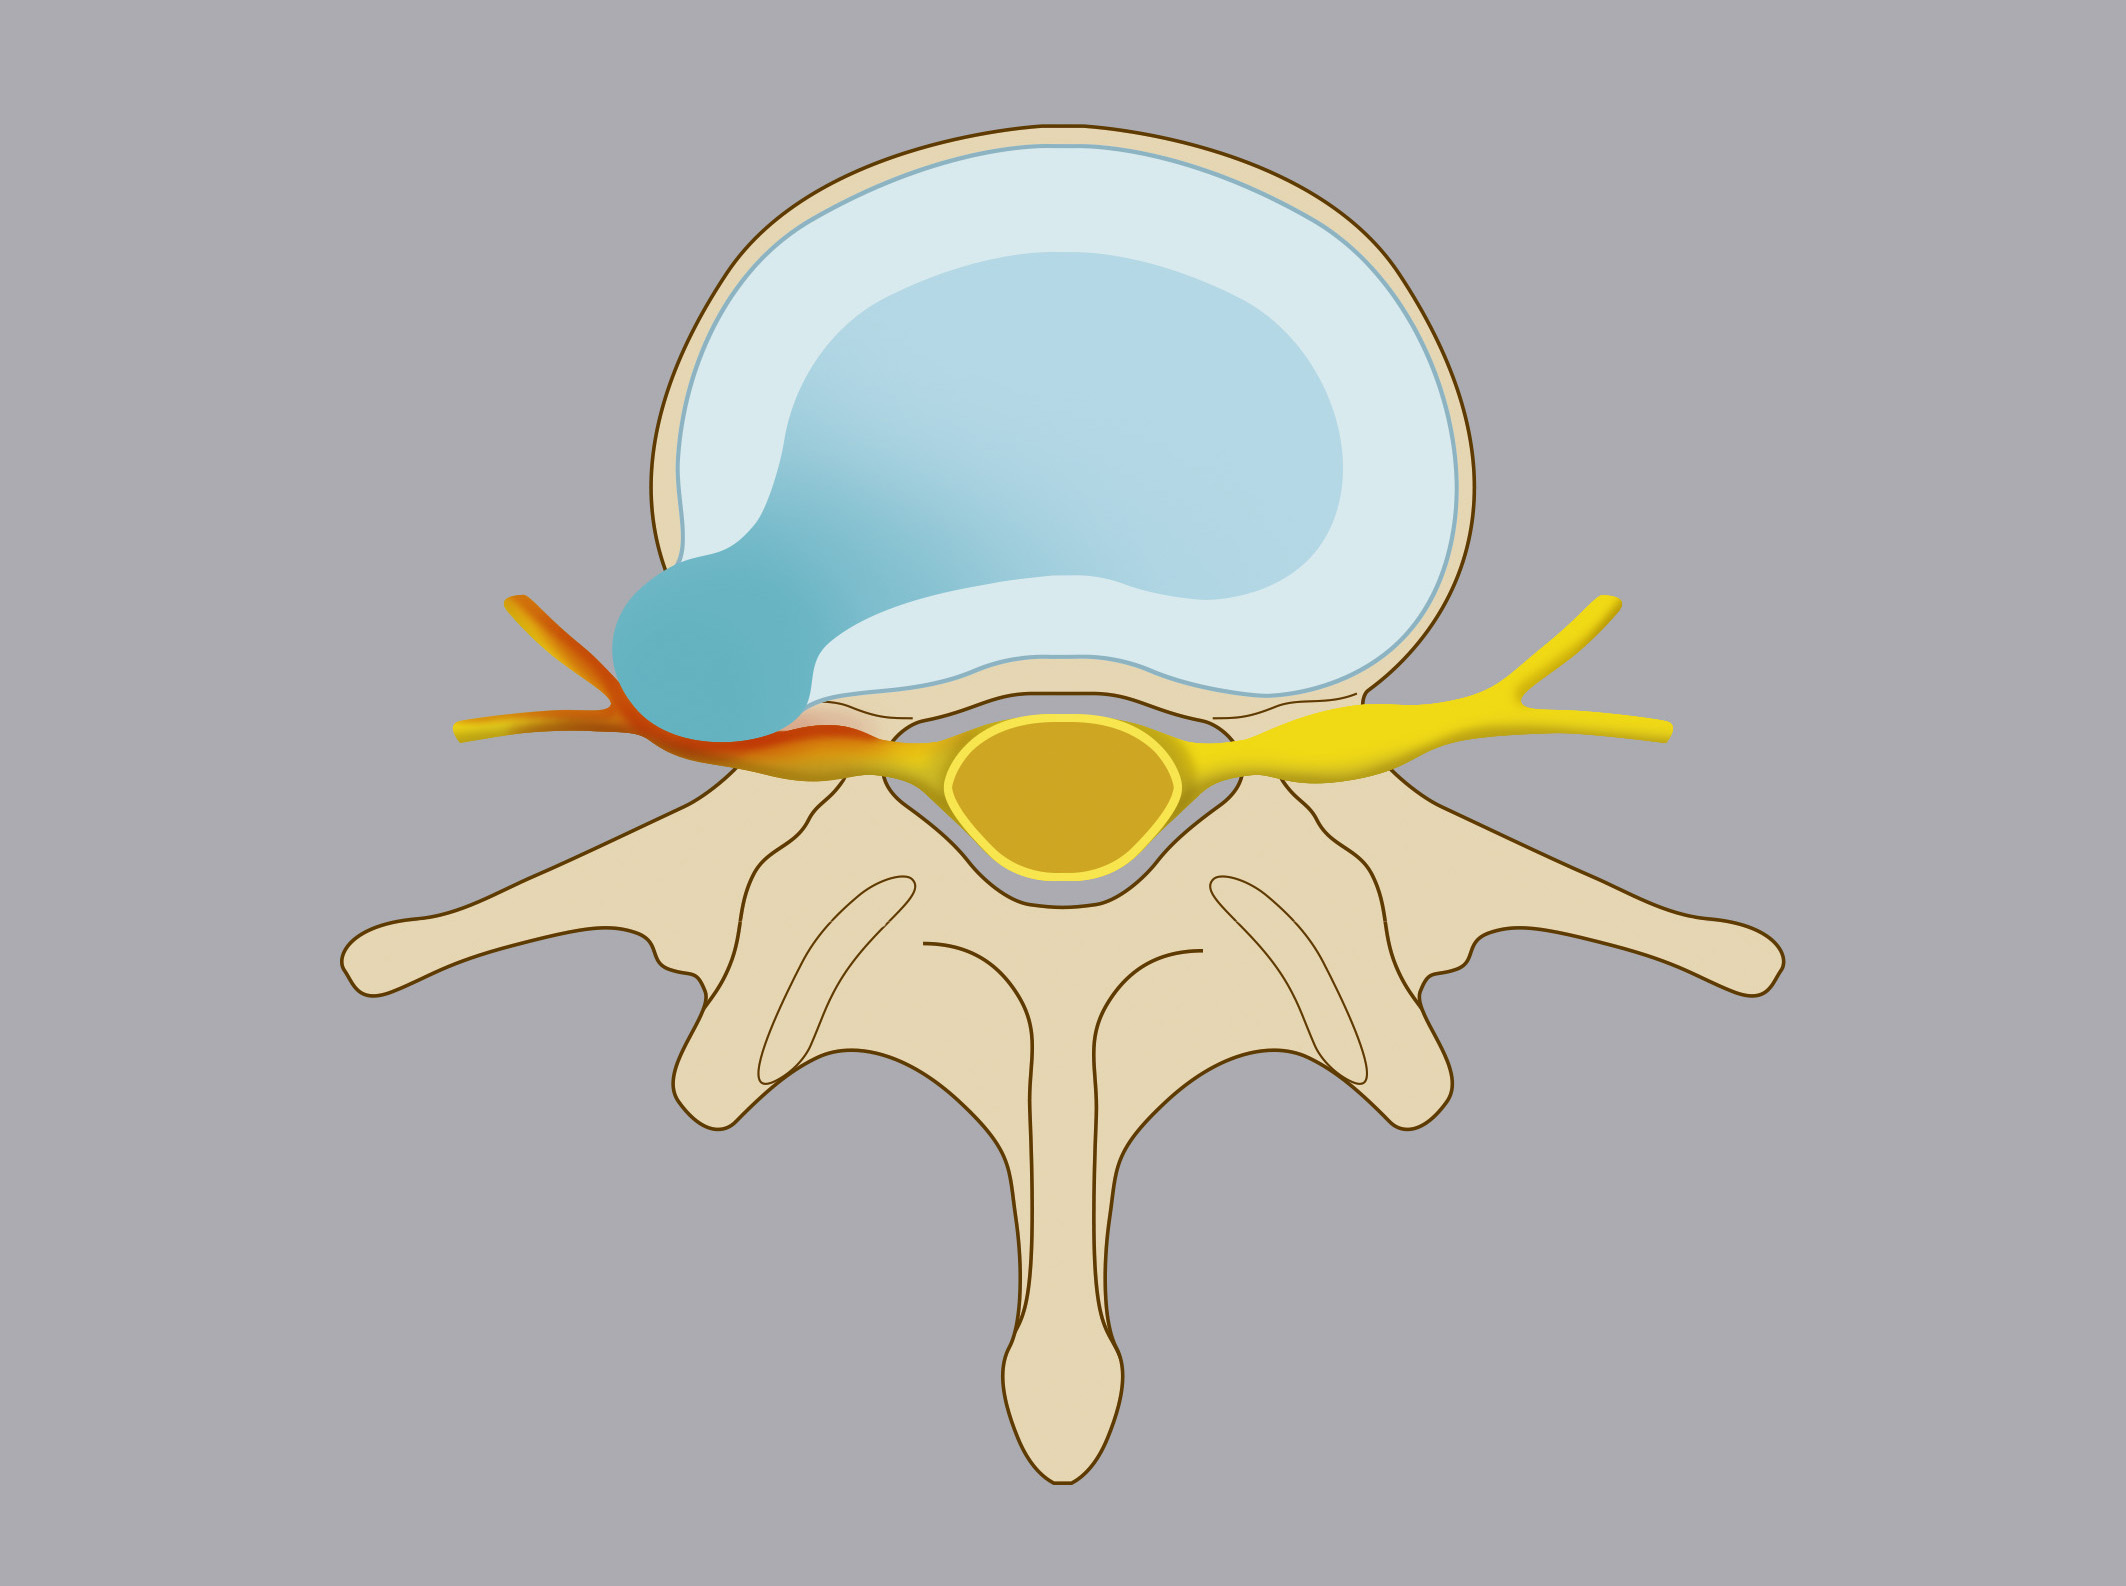 Extraforaminal herniation. The nucleus pulposus spills laterally to the intervertebral foramina